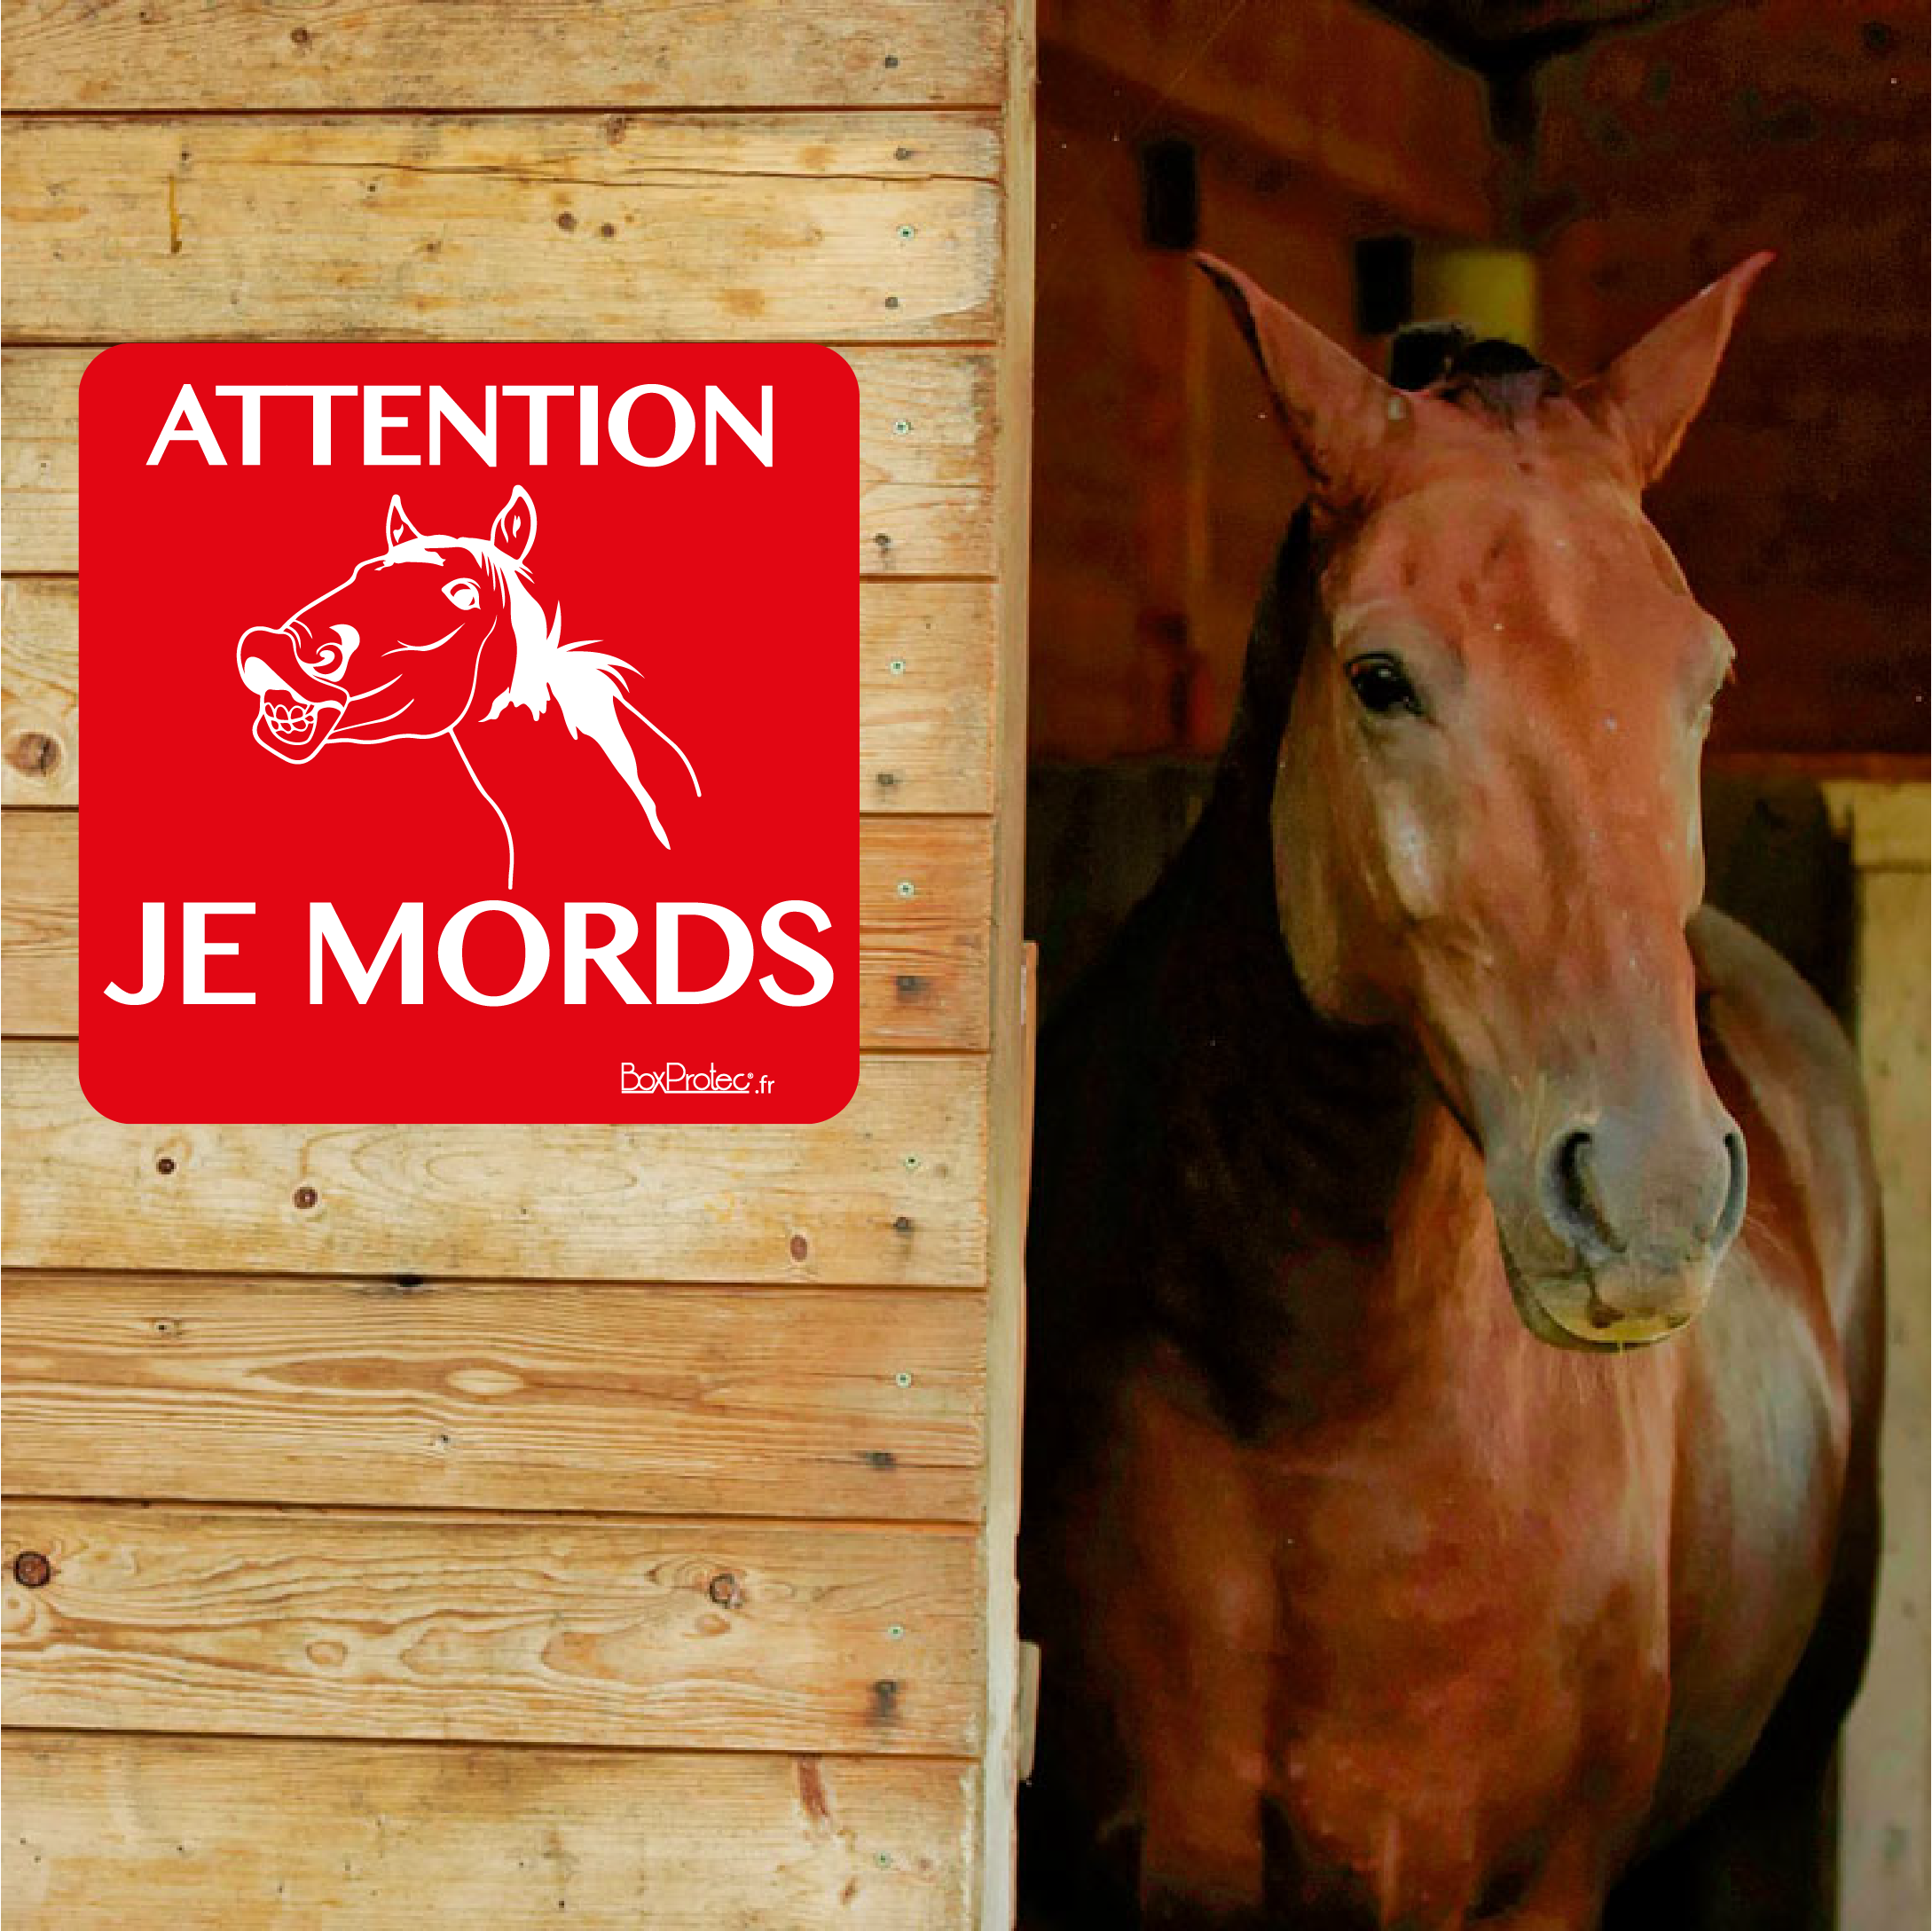 Attention chevaux arrondi